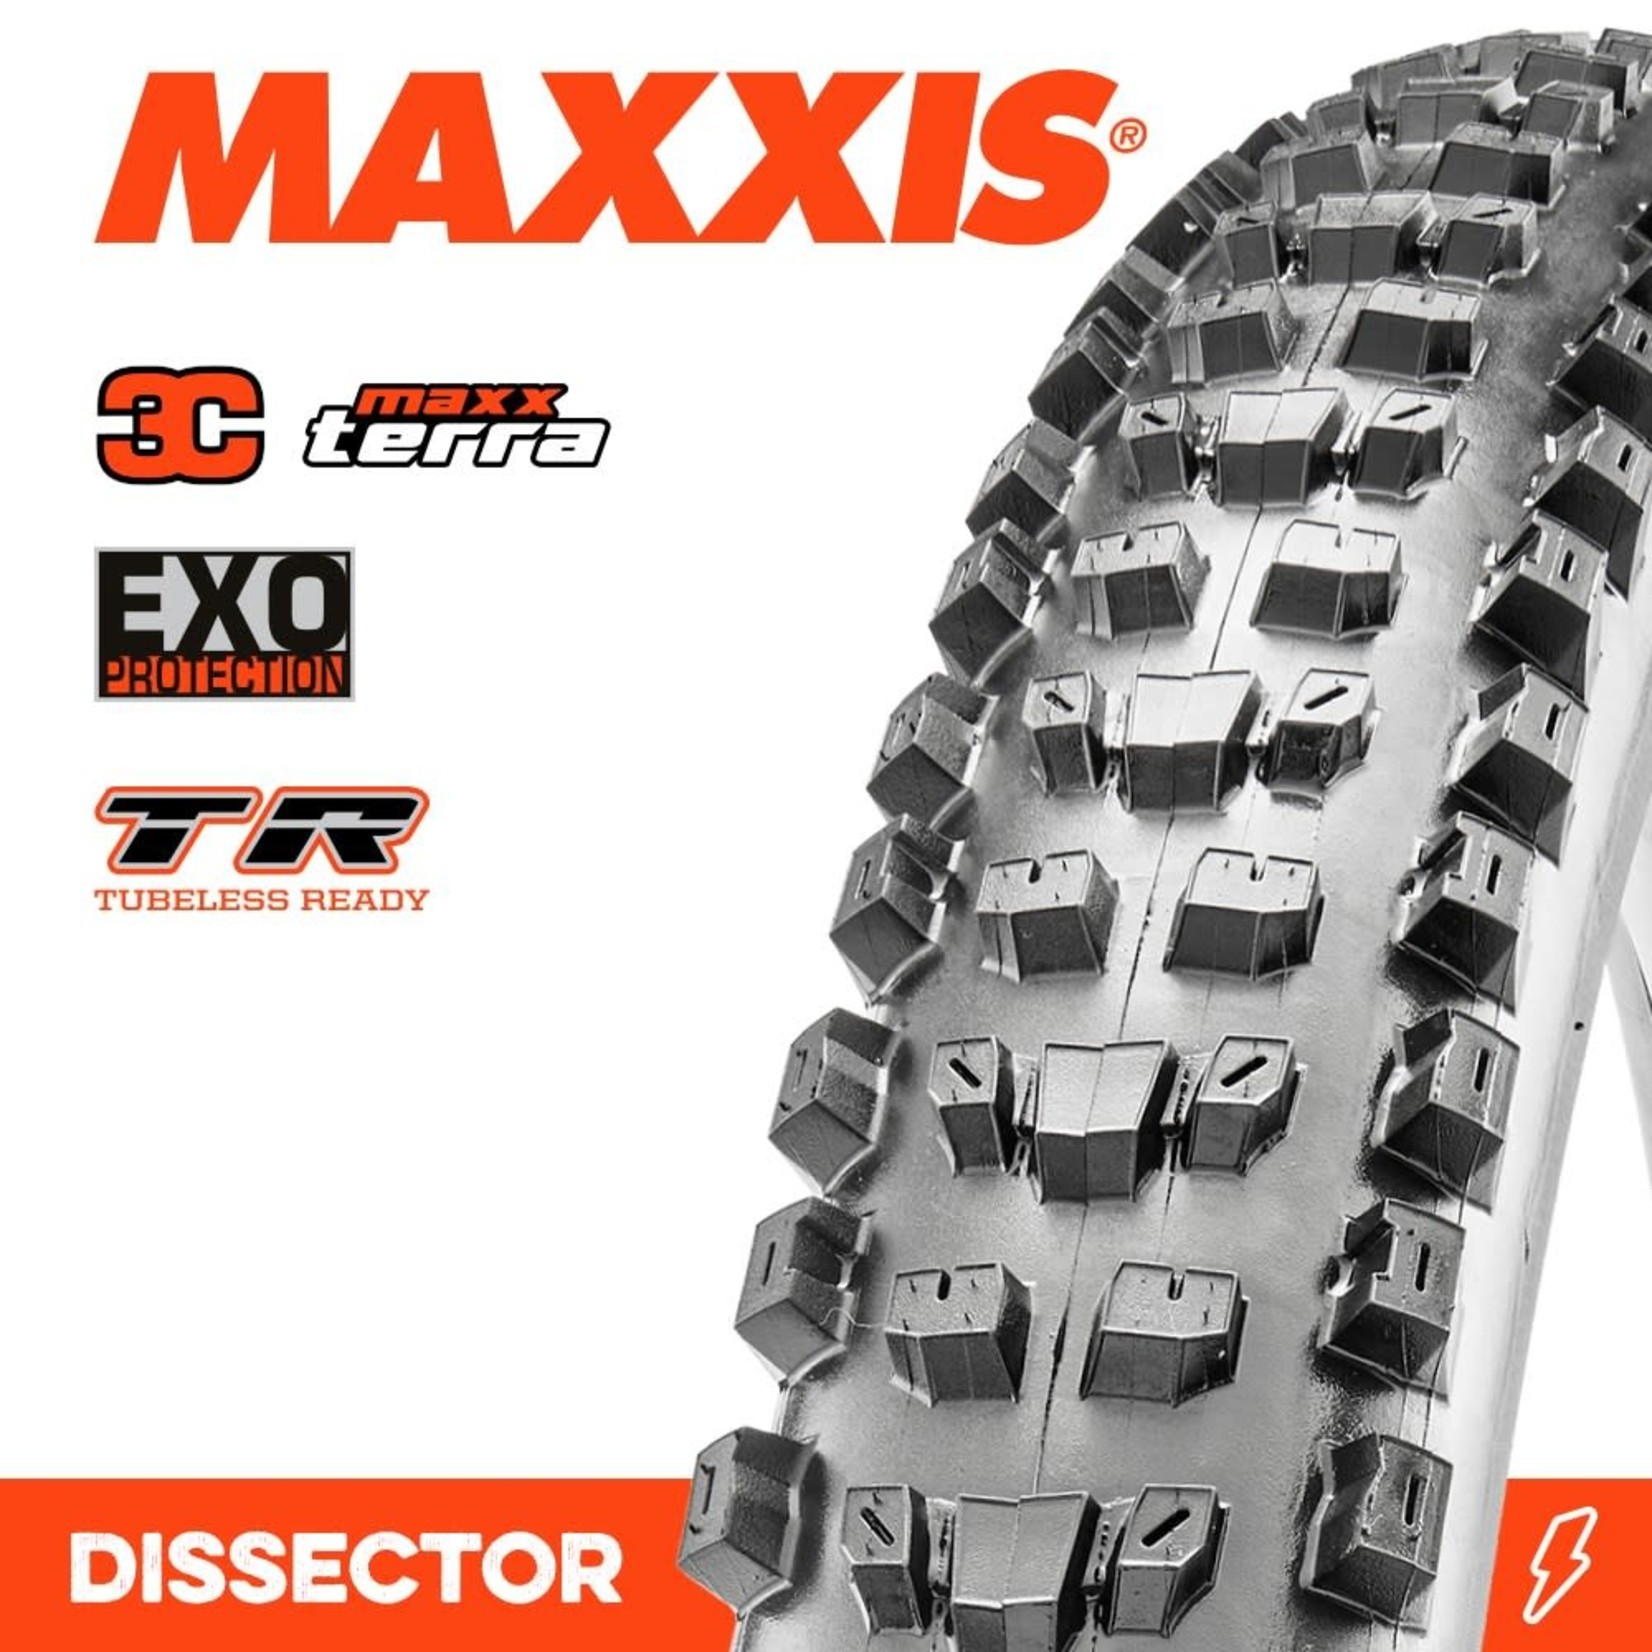 Maxxis Maxxis Dissector Bike Tyre - 27.5 X 2.40 - WT 3C Terra Exo TR Folding - Pair